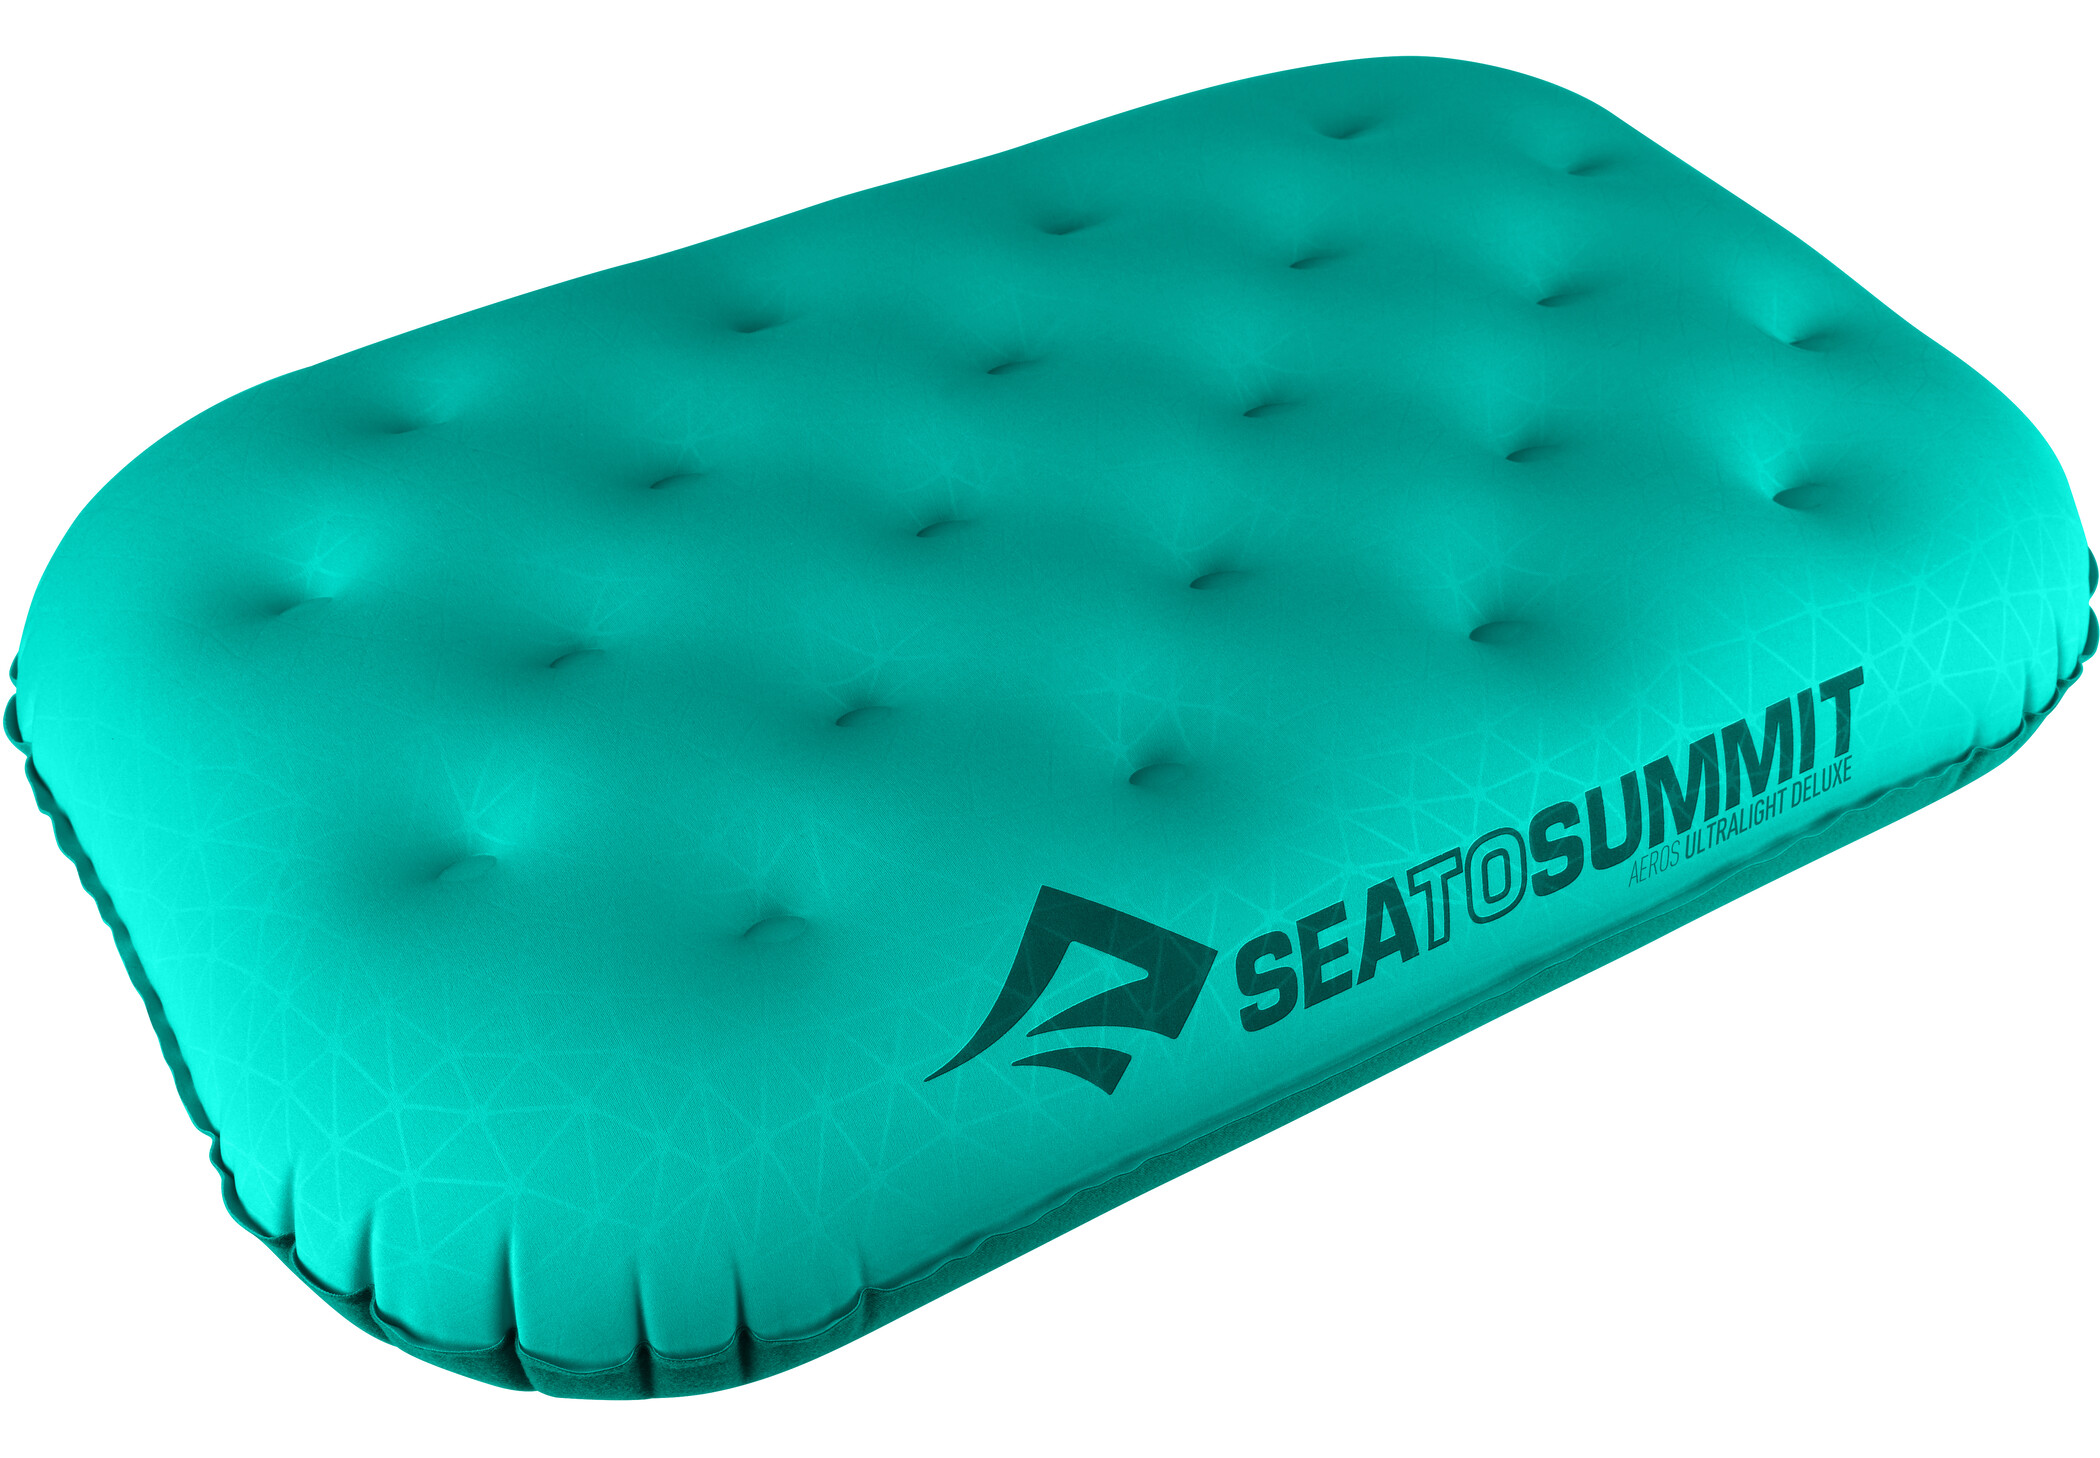 Sea to Summit Aeros Ultralight Poduszka Deluxe, turkusowy